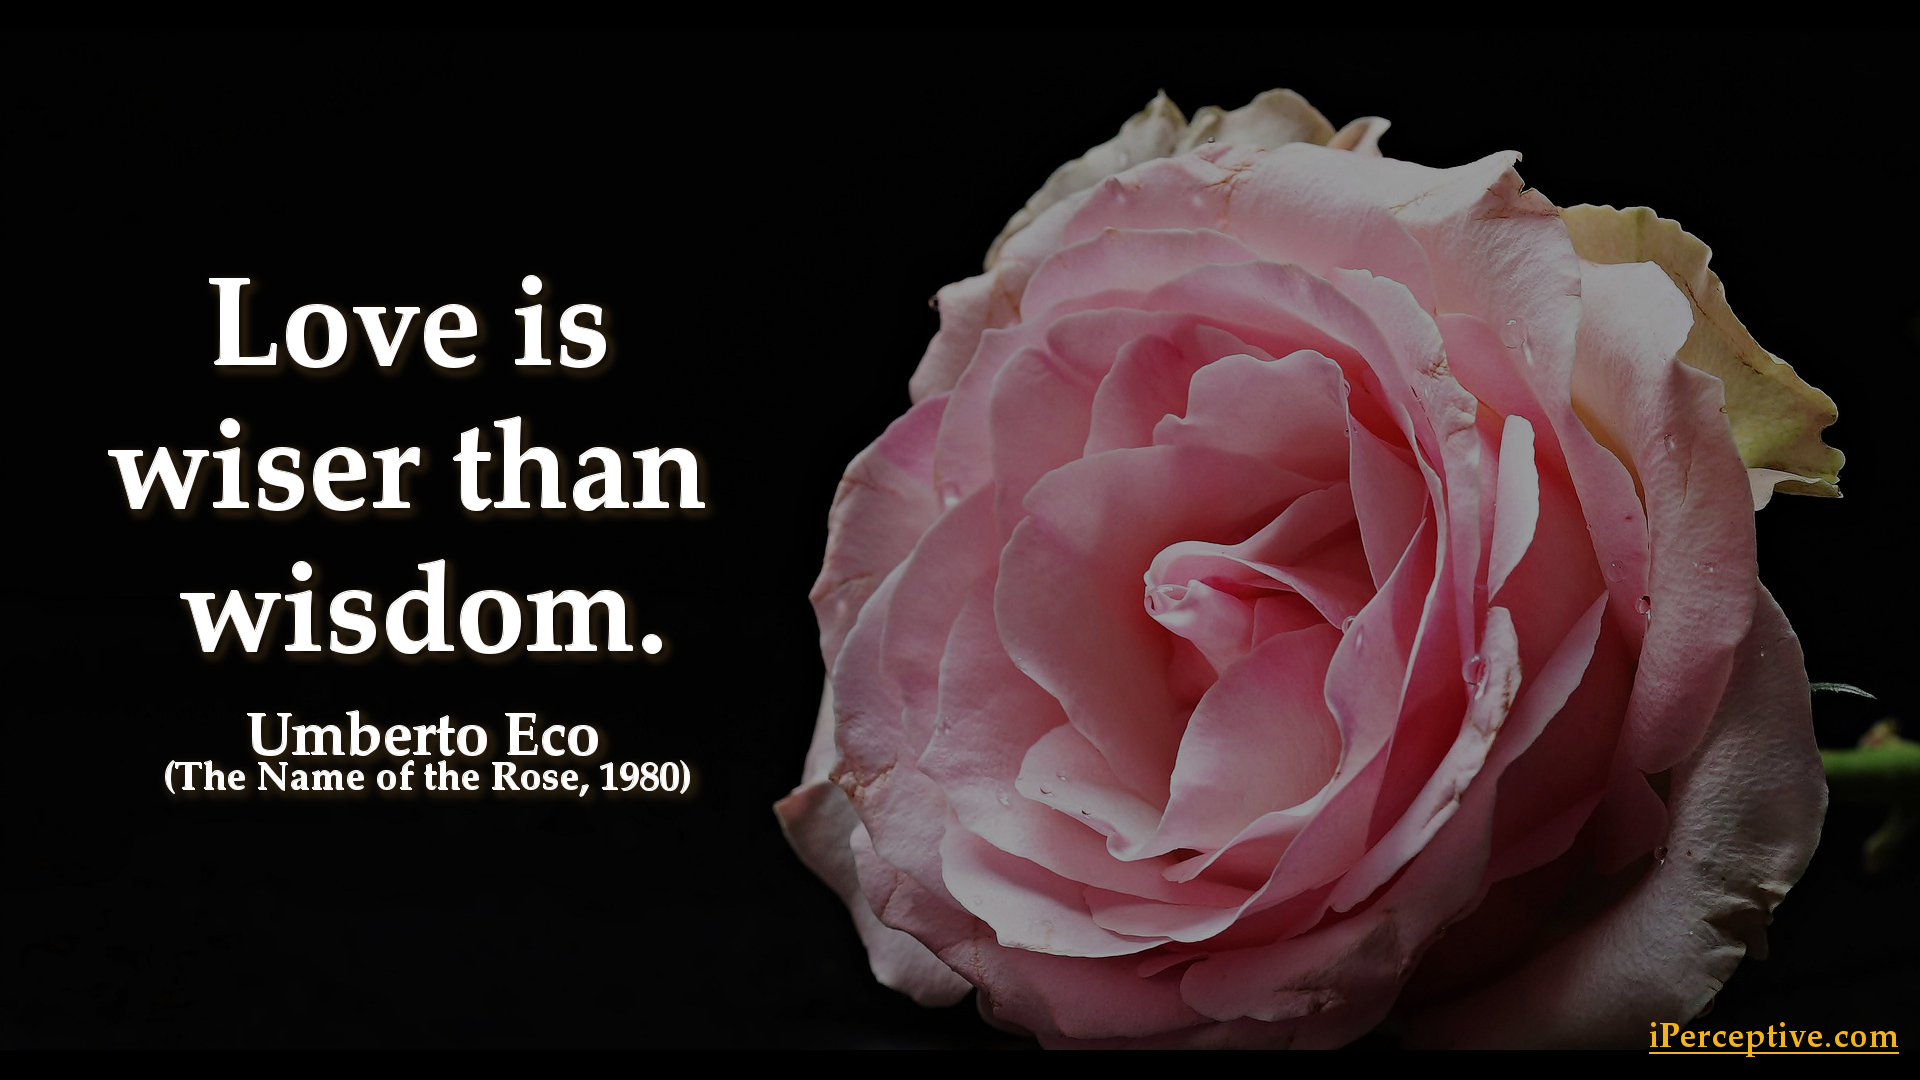 Umberto Eco Quote: Love is wiser than wisdom.